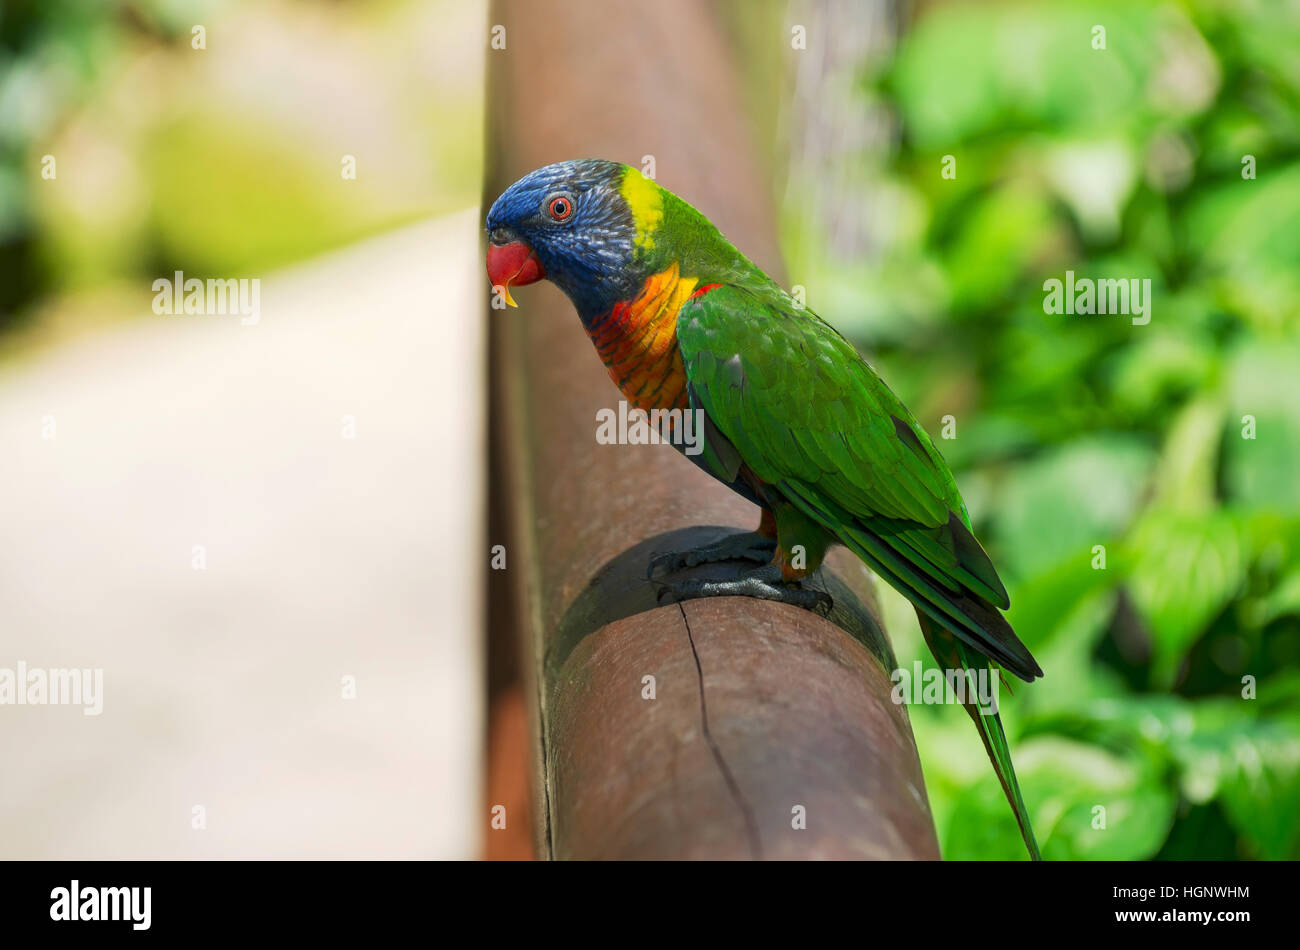 profile of rainbow lorikeet or trichoglossus moluccanus bird perched on railing Stock Photo